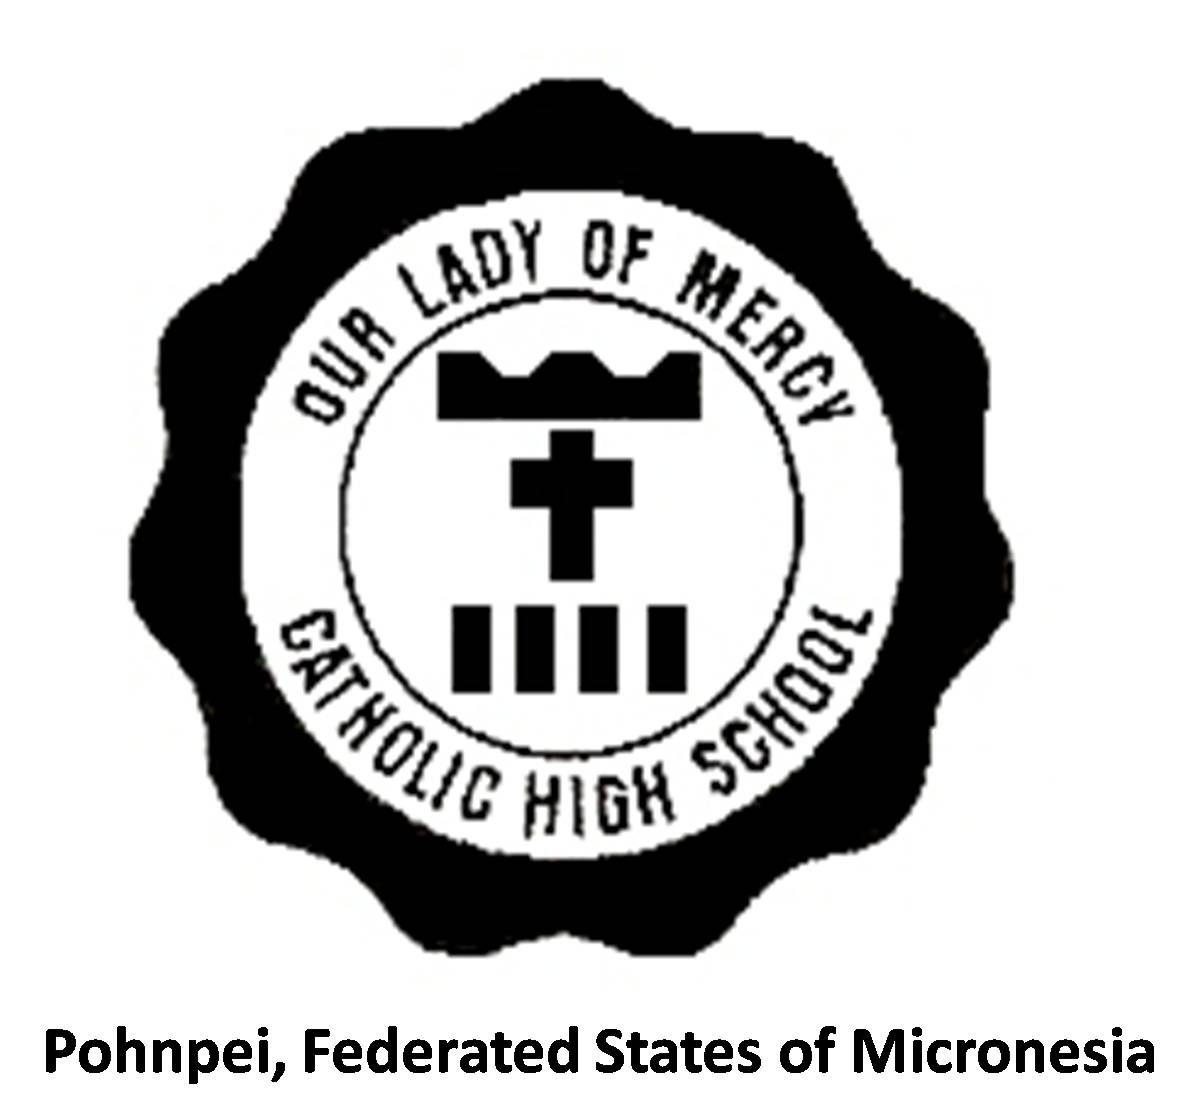 Our Lady of Mercy Catholic High School (OLMCHS) - Micronesia